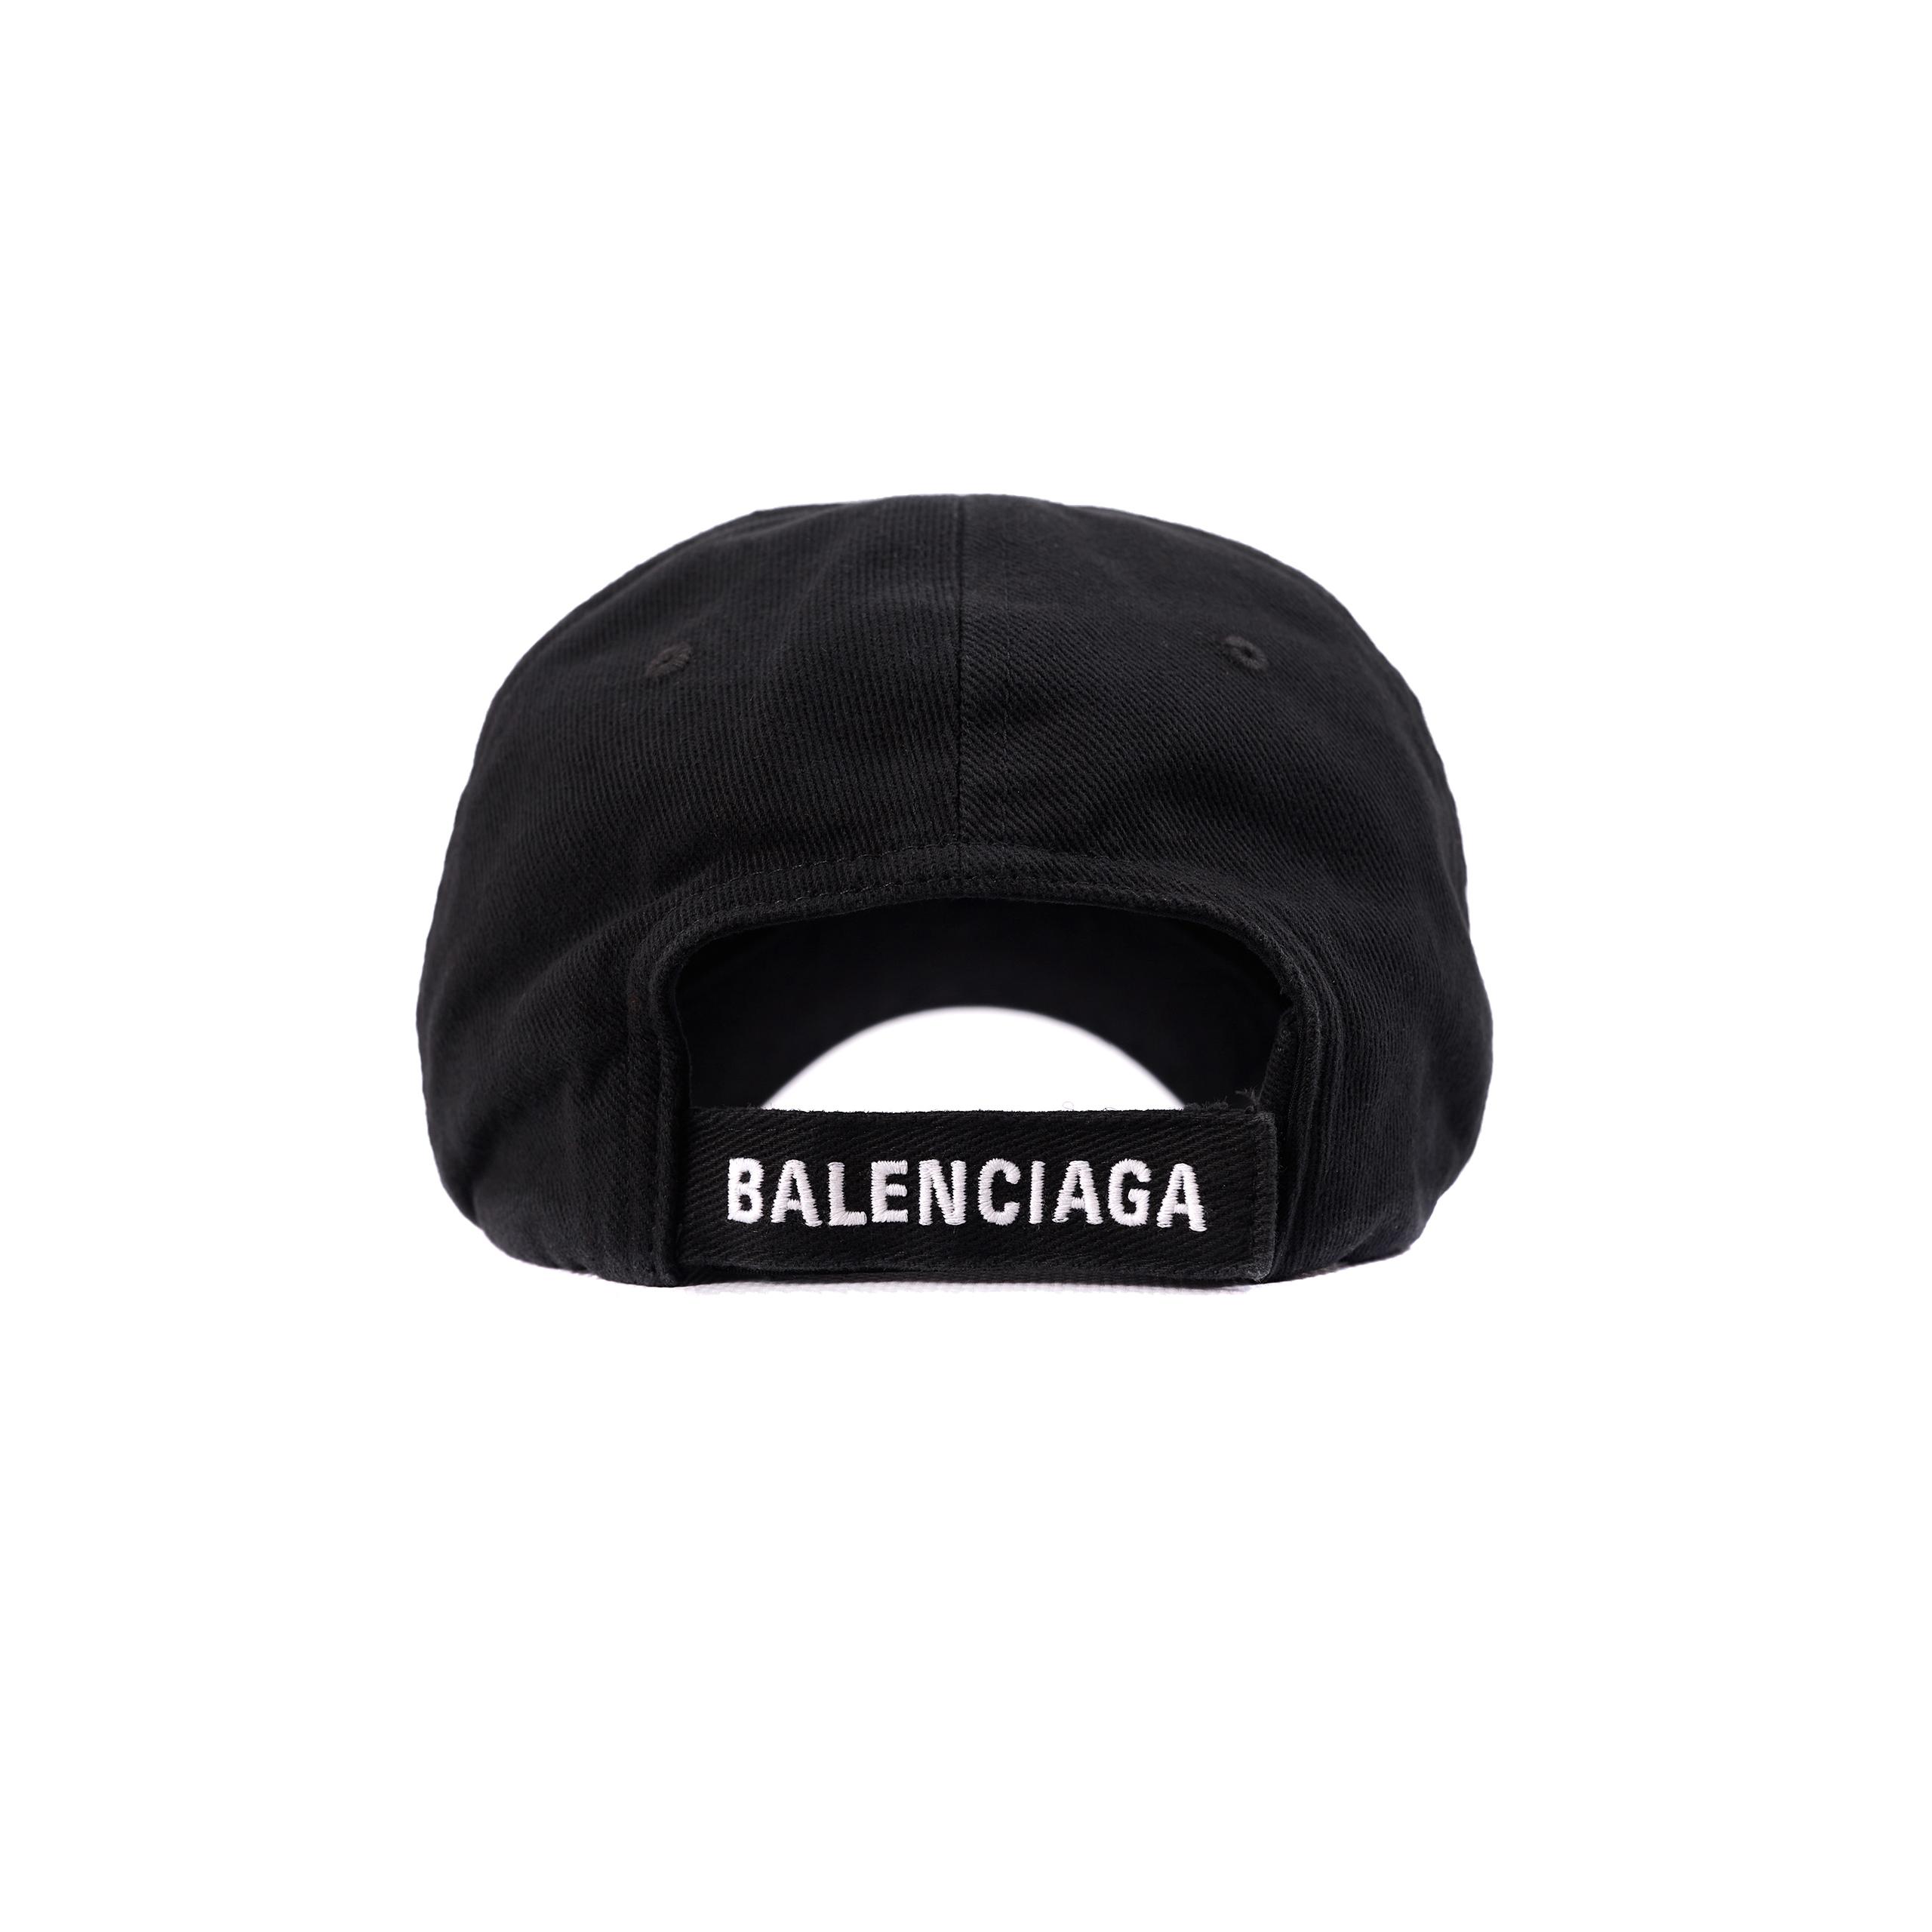 Balenciaga Cotton Embroidered Gay Cap in Black for Men - Lyst